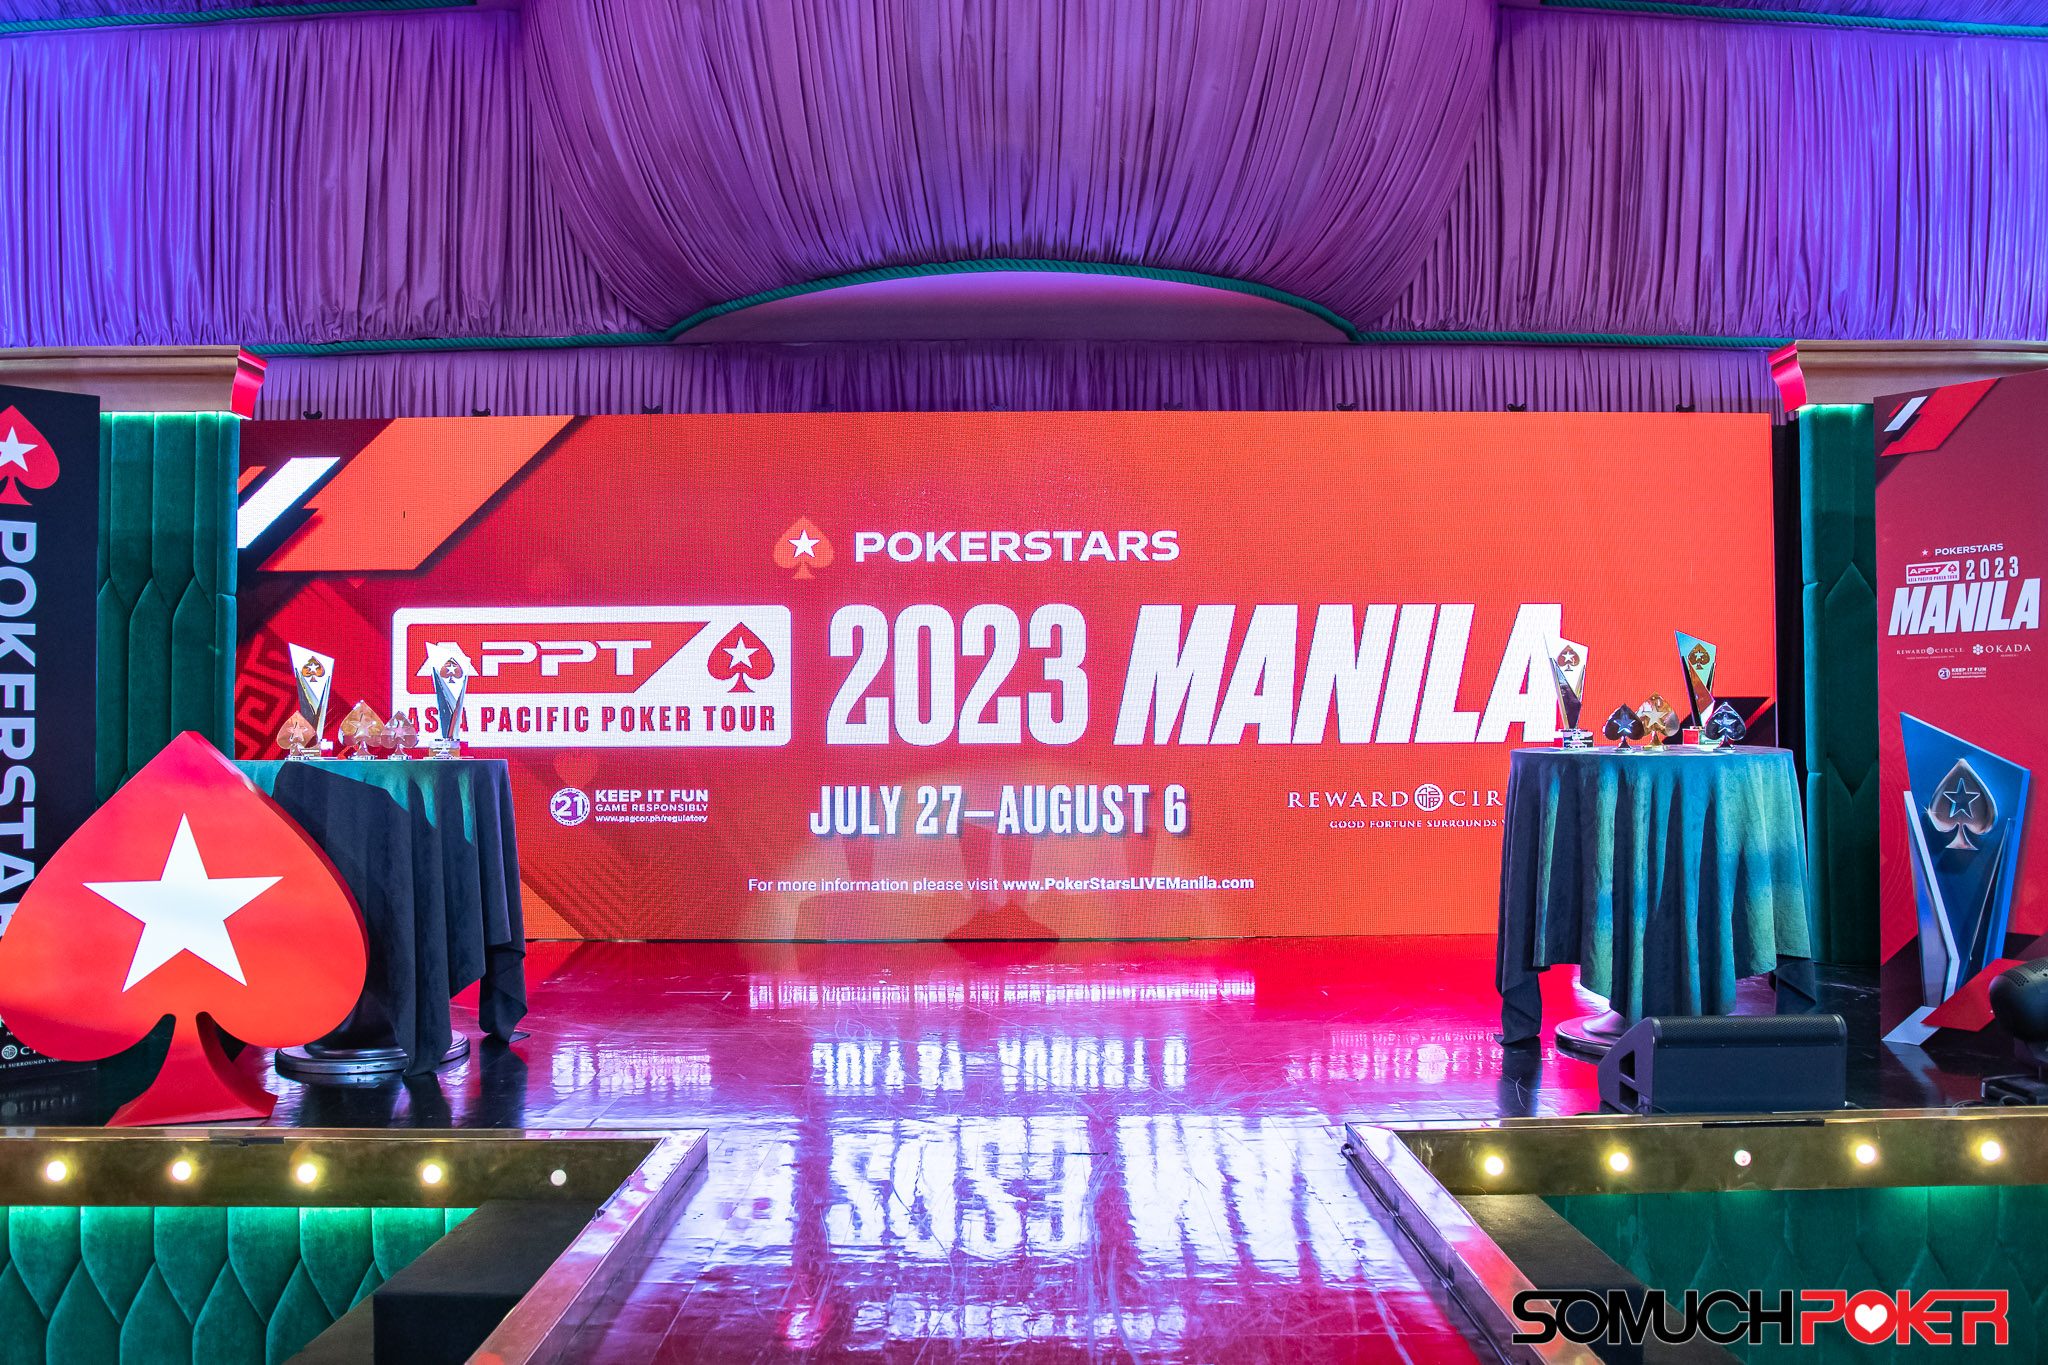 Asia Pacific Poker Tour Manila begins - July 27 to August 6 at Okada Manila